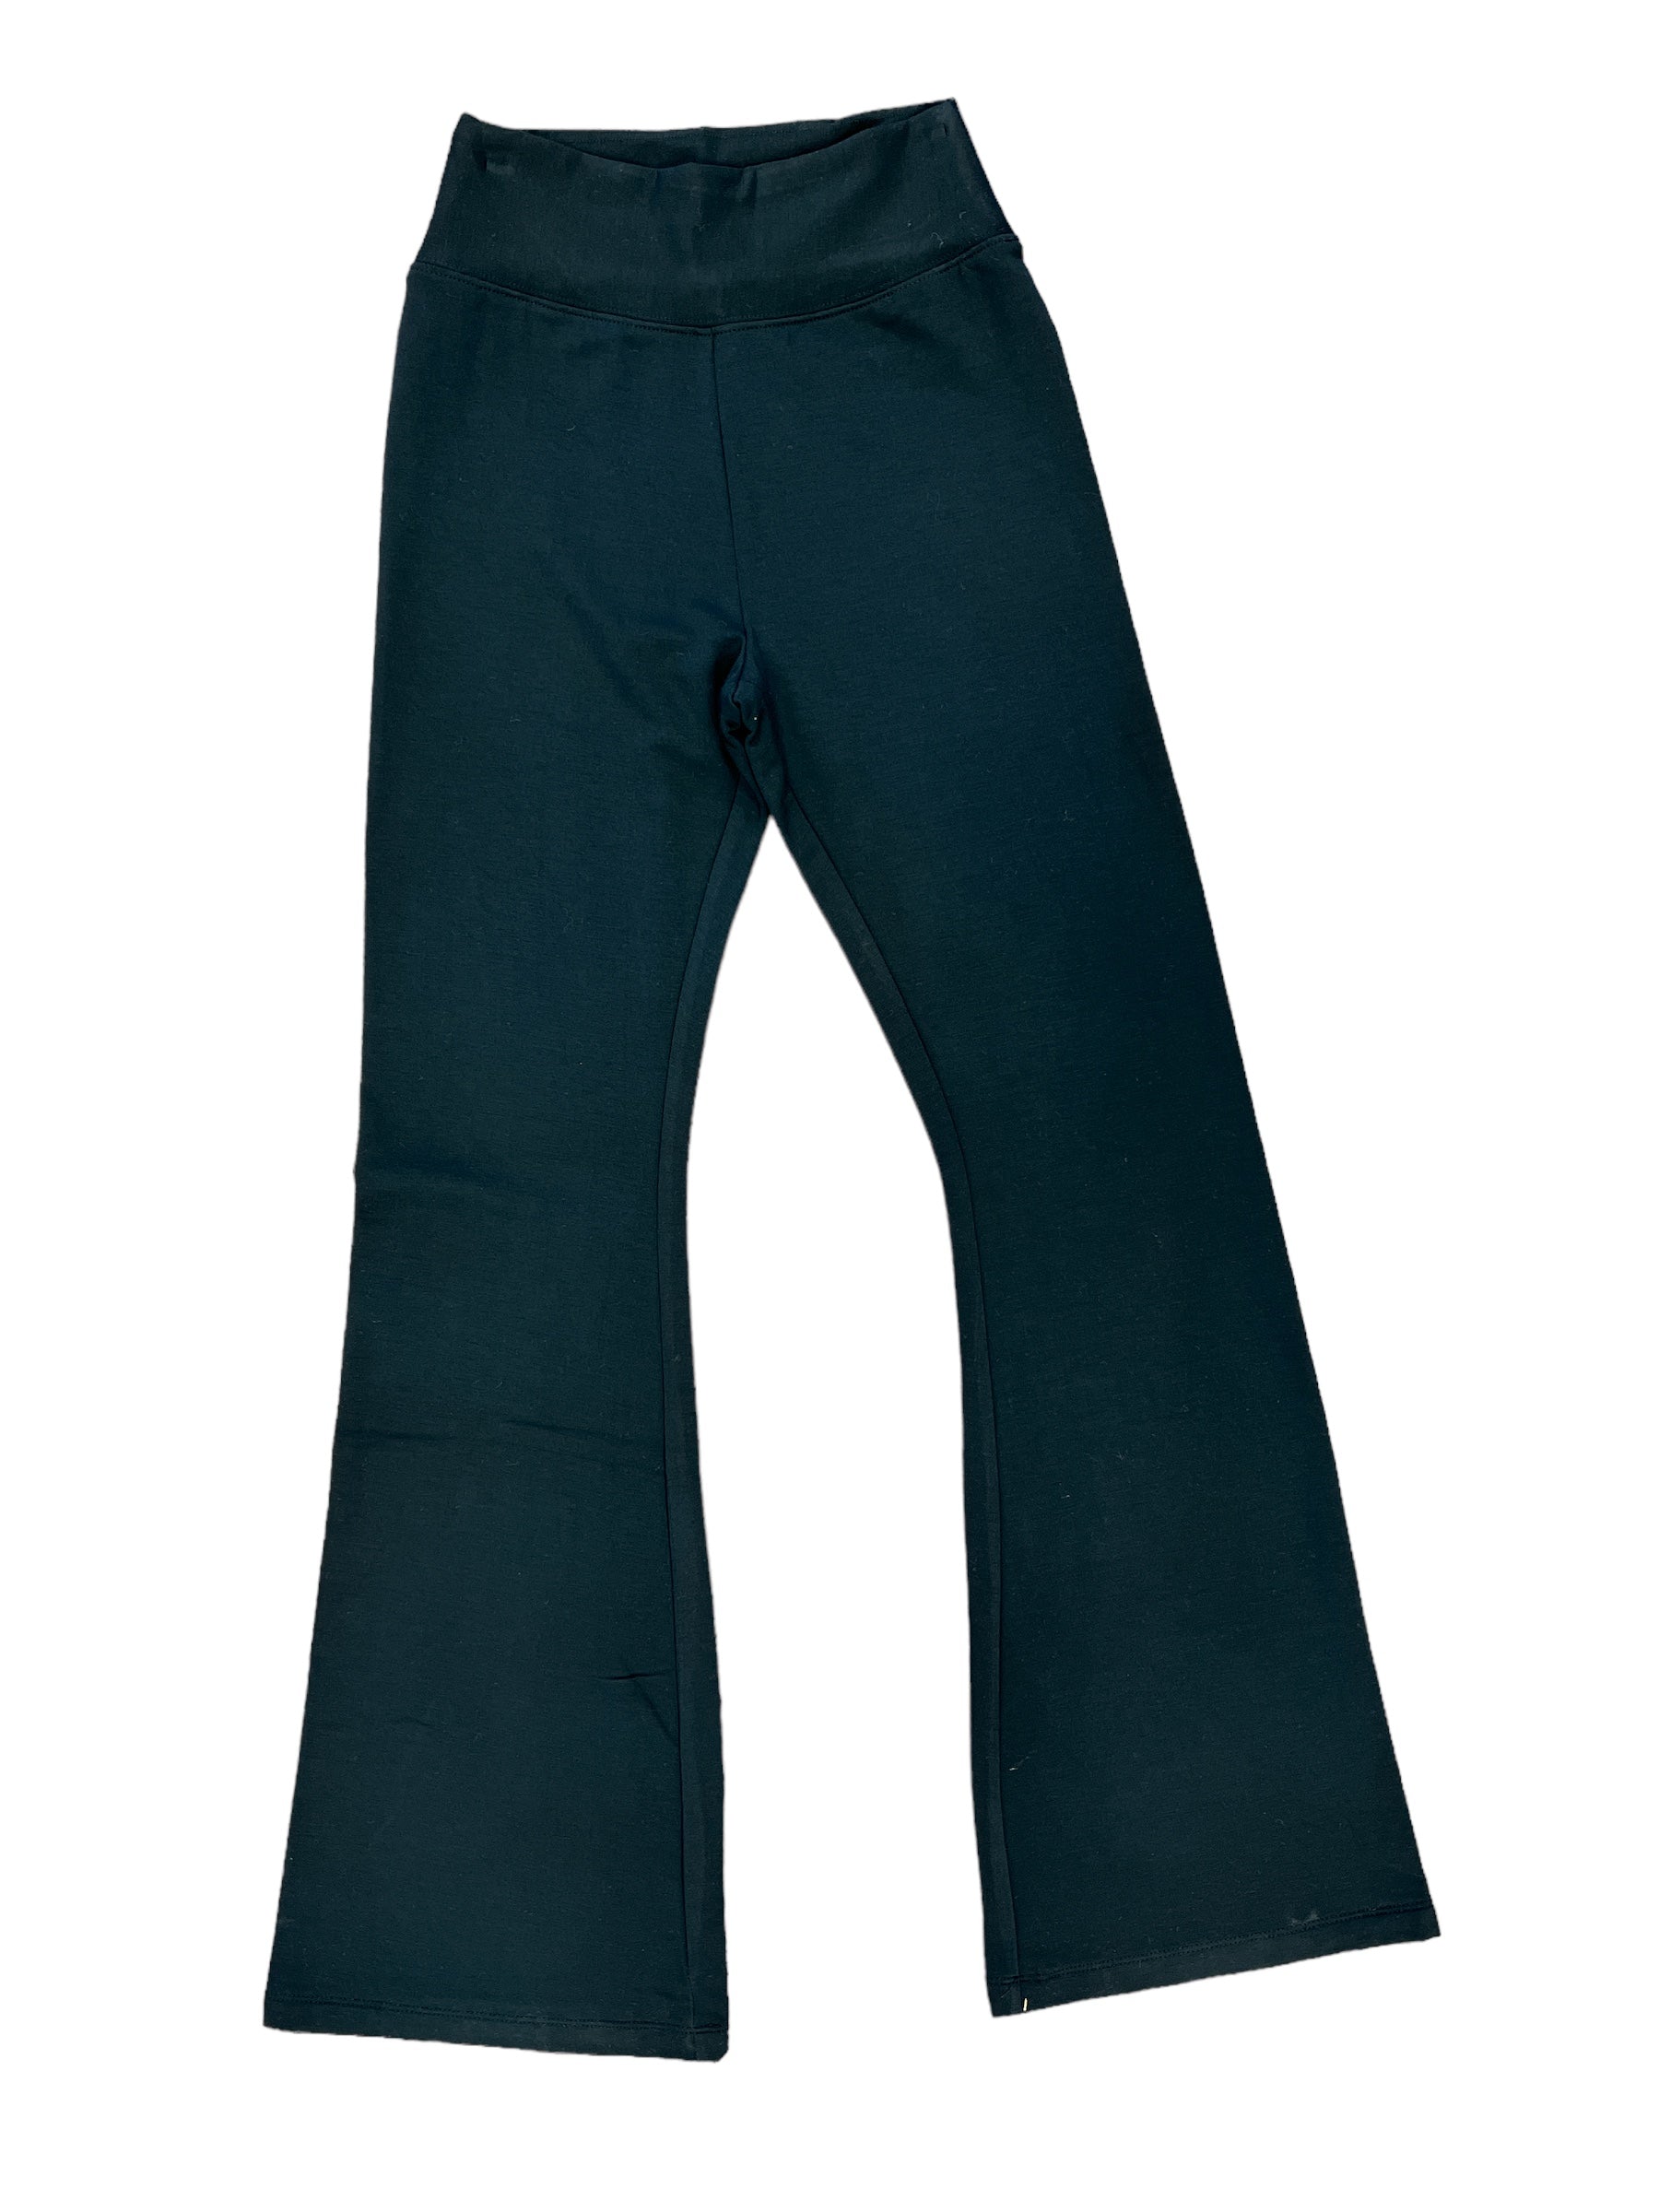 Everyday Modal Flare Pant-230 Pants-Simply Stylish Boutique-Simply Stylish Boutique | Women’s & Kid’s Fashion | Paducah, KY